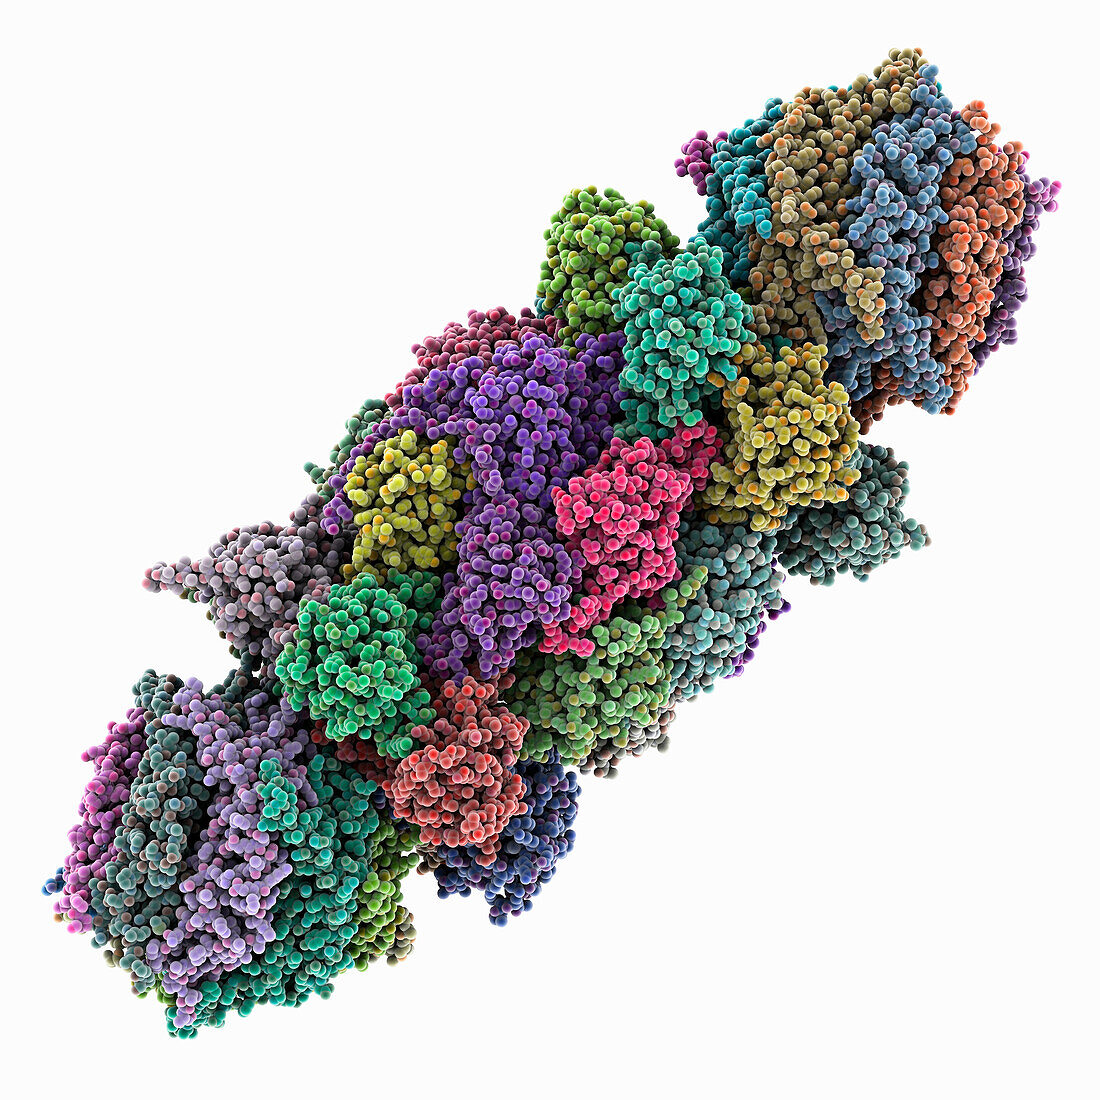 Human PA28-20S-Pa28 proteasome complex, molecular model